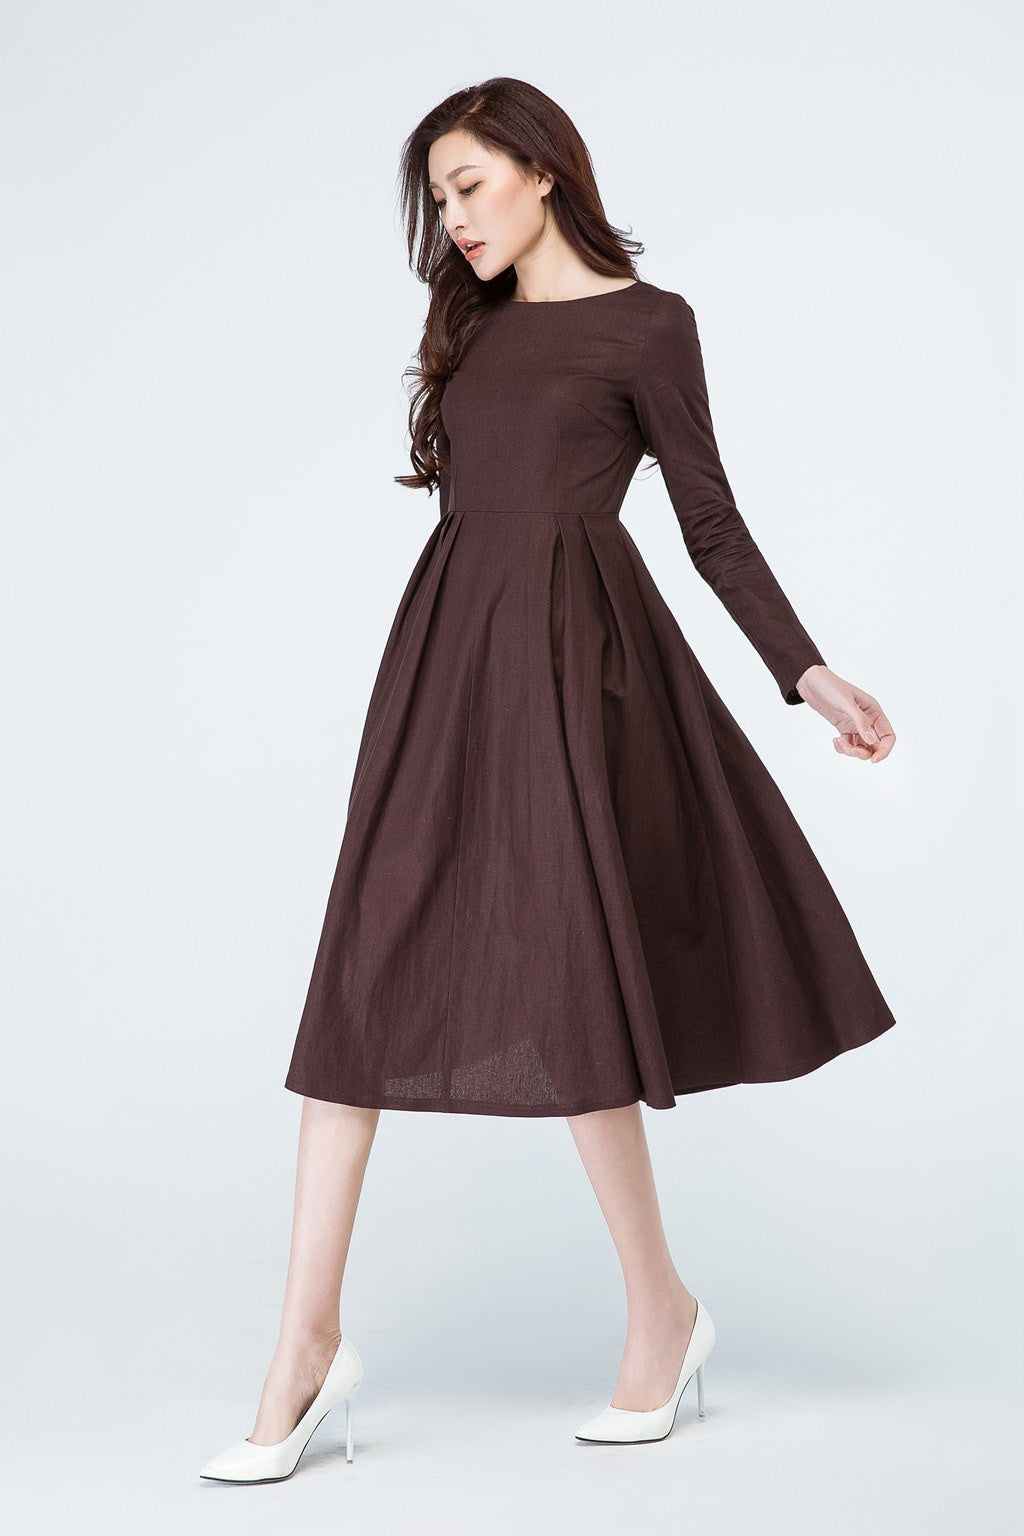 long sleeve brown dress